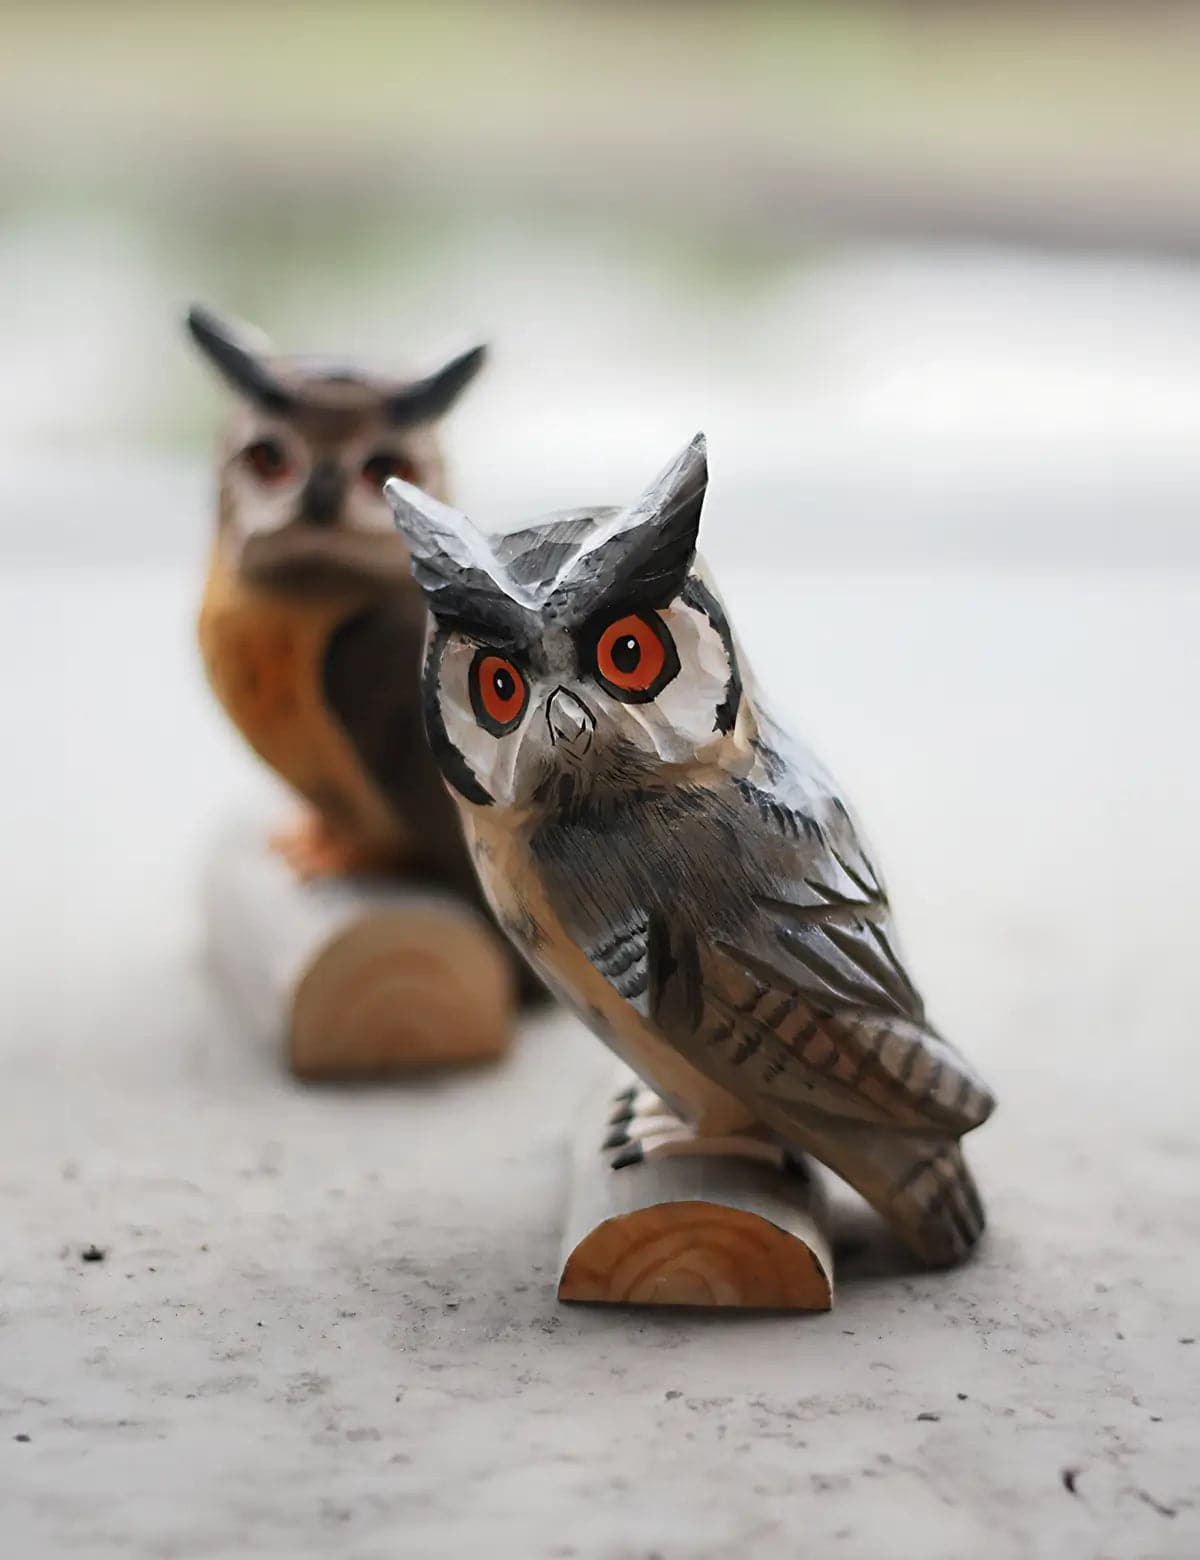 Whimsical-Owl-Wood-Carving-Desk-Ornament-05